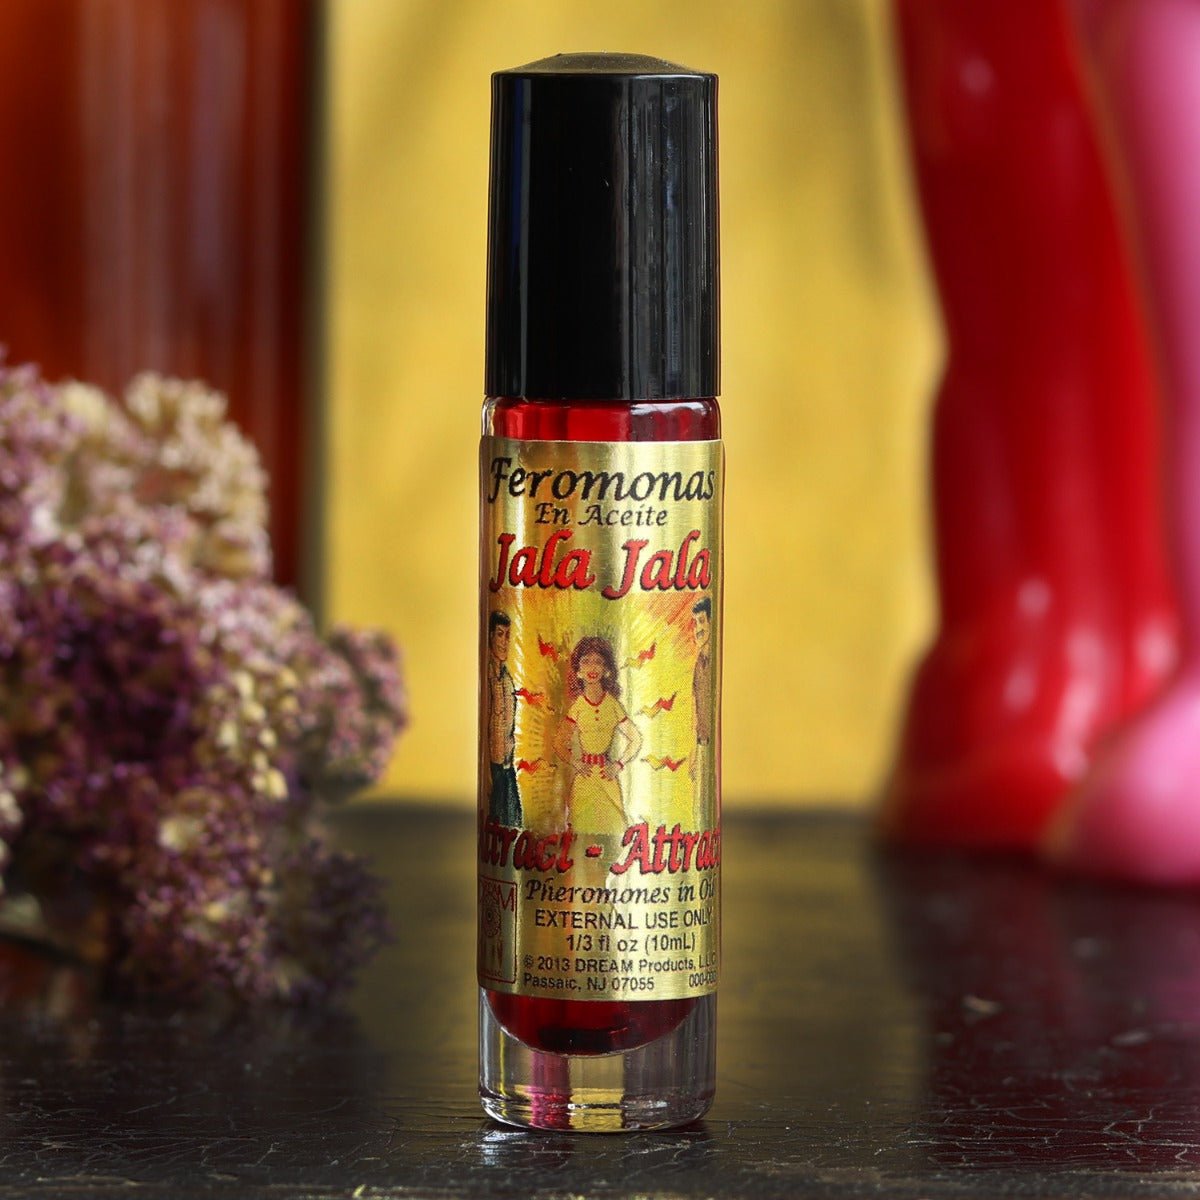 AROMOLON Pheromone Perfume Spray for Women – Rose and Soft Spicy